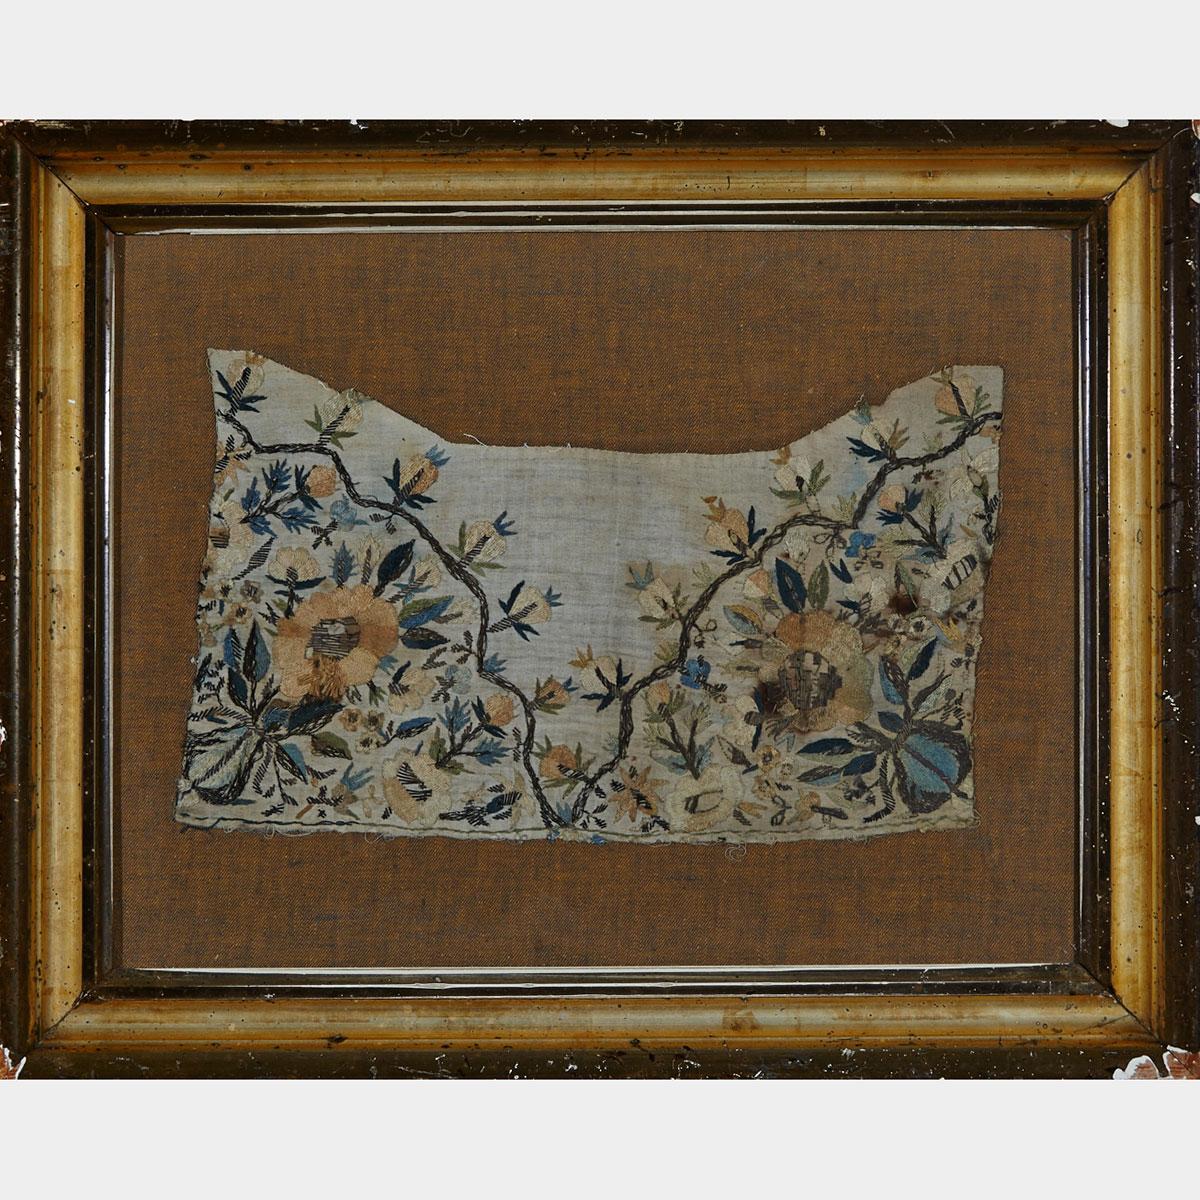 Floral Needlework Fragment, 17th century